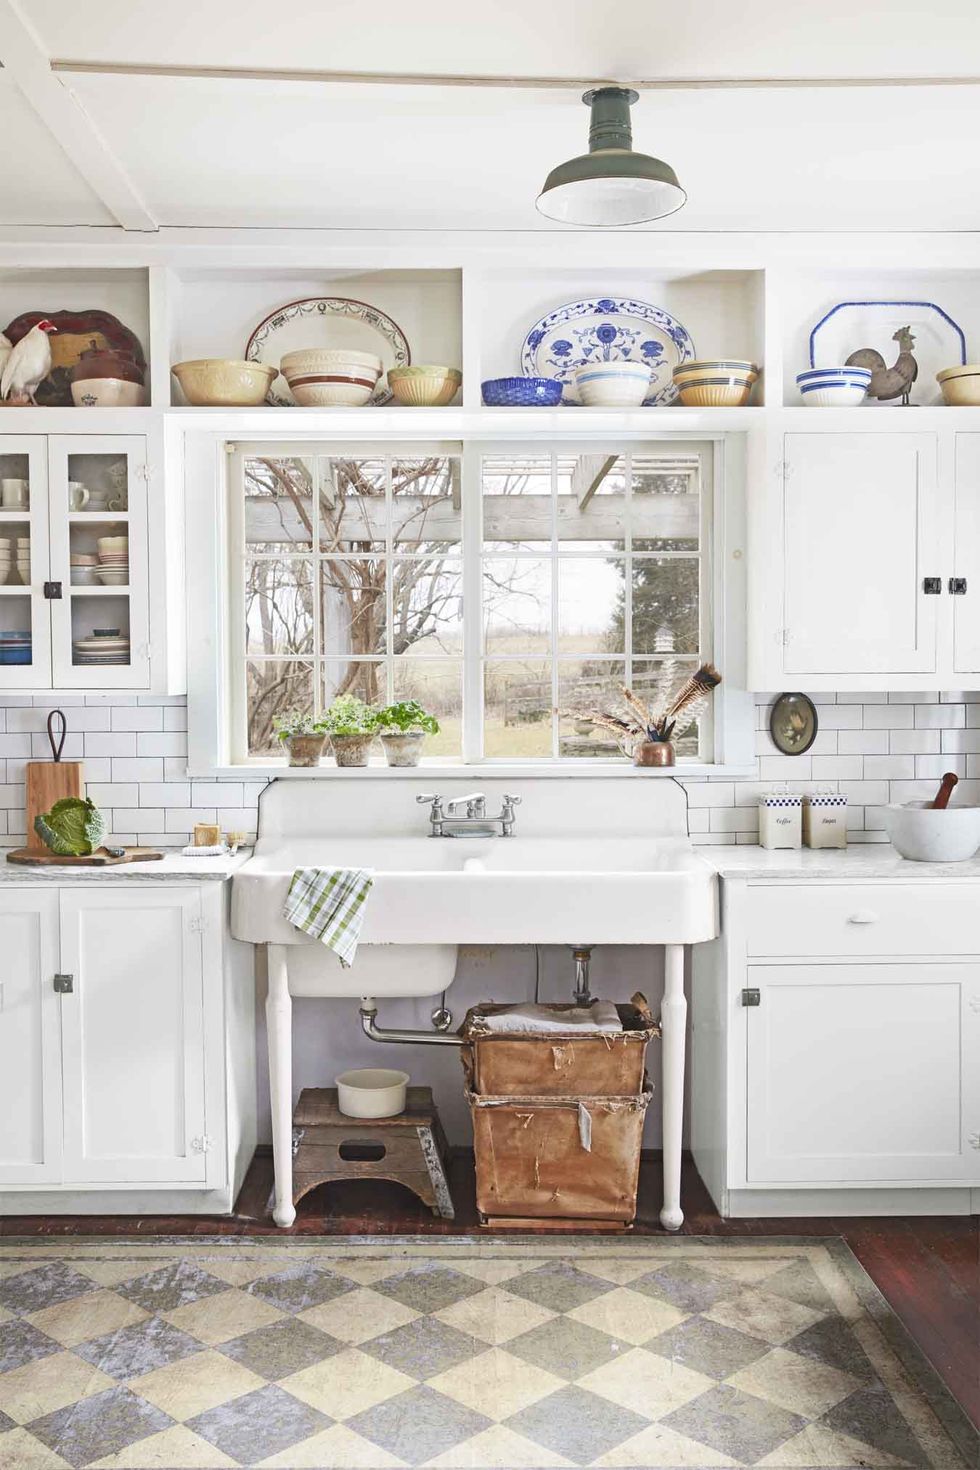 20 Vintage Kitchen Decorating Ideas - Design Inspiration for Retro ...